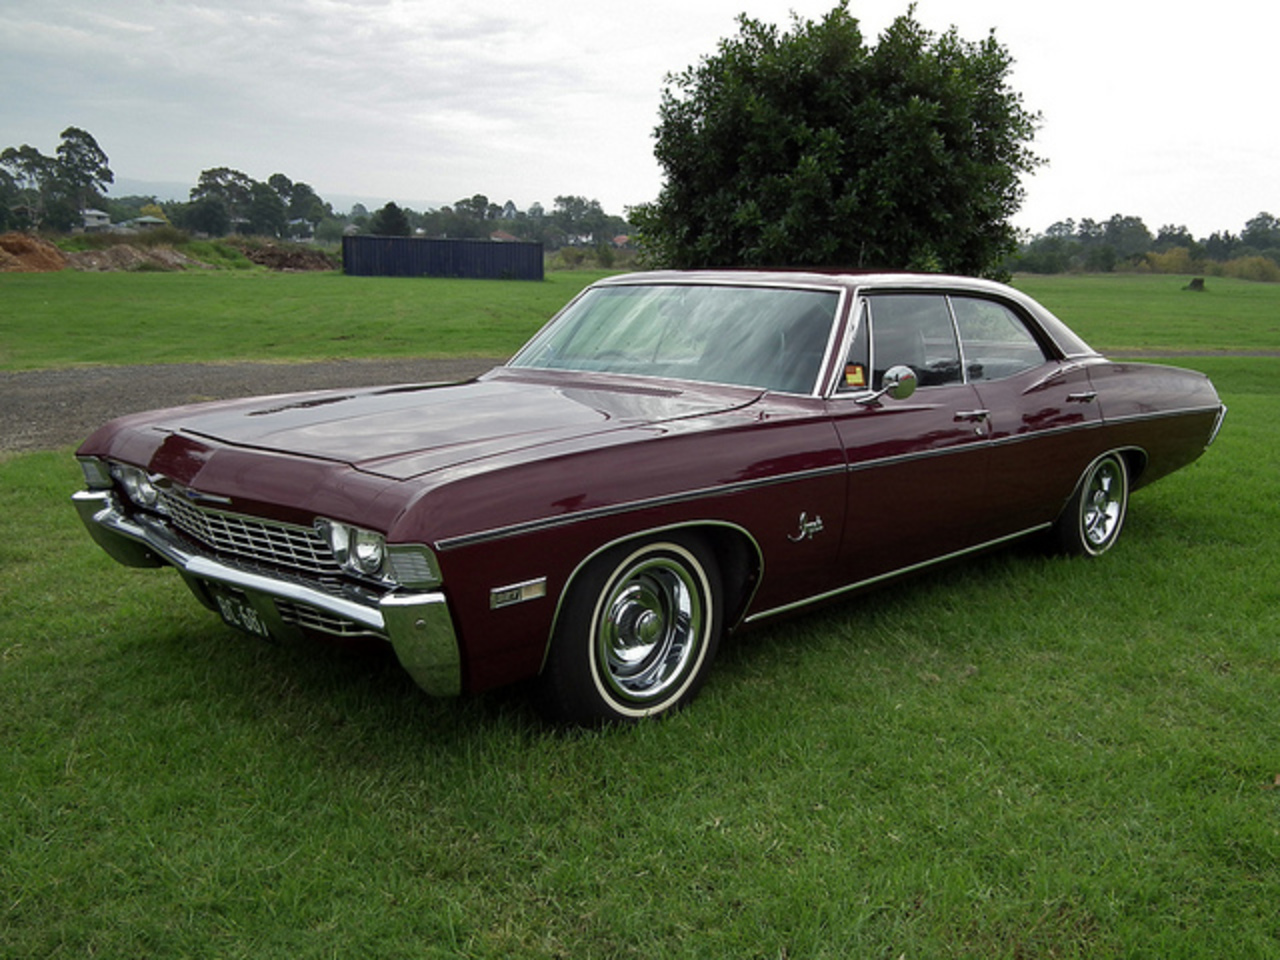 1968 Chevrolet Impala hardtop Flickr - Photo Sharing! 